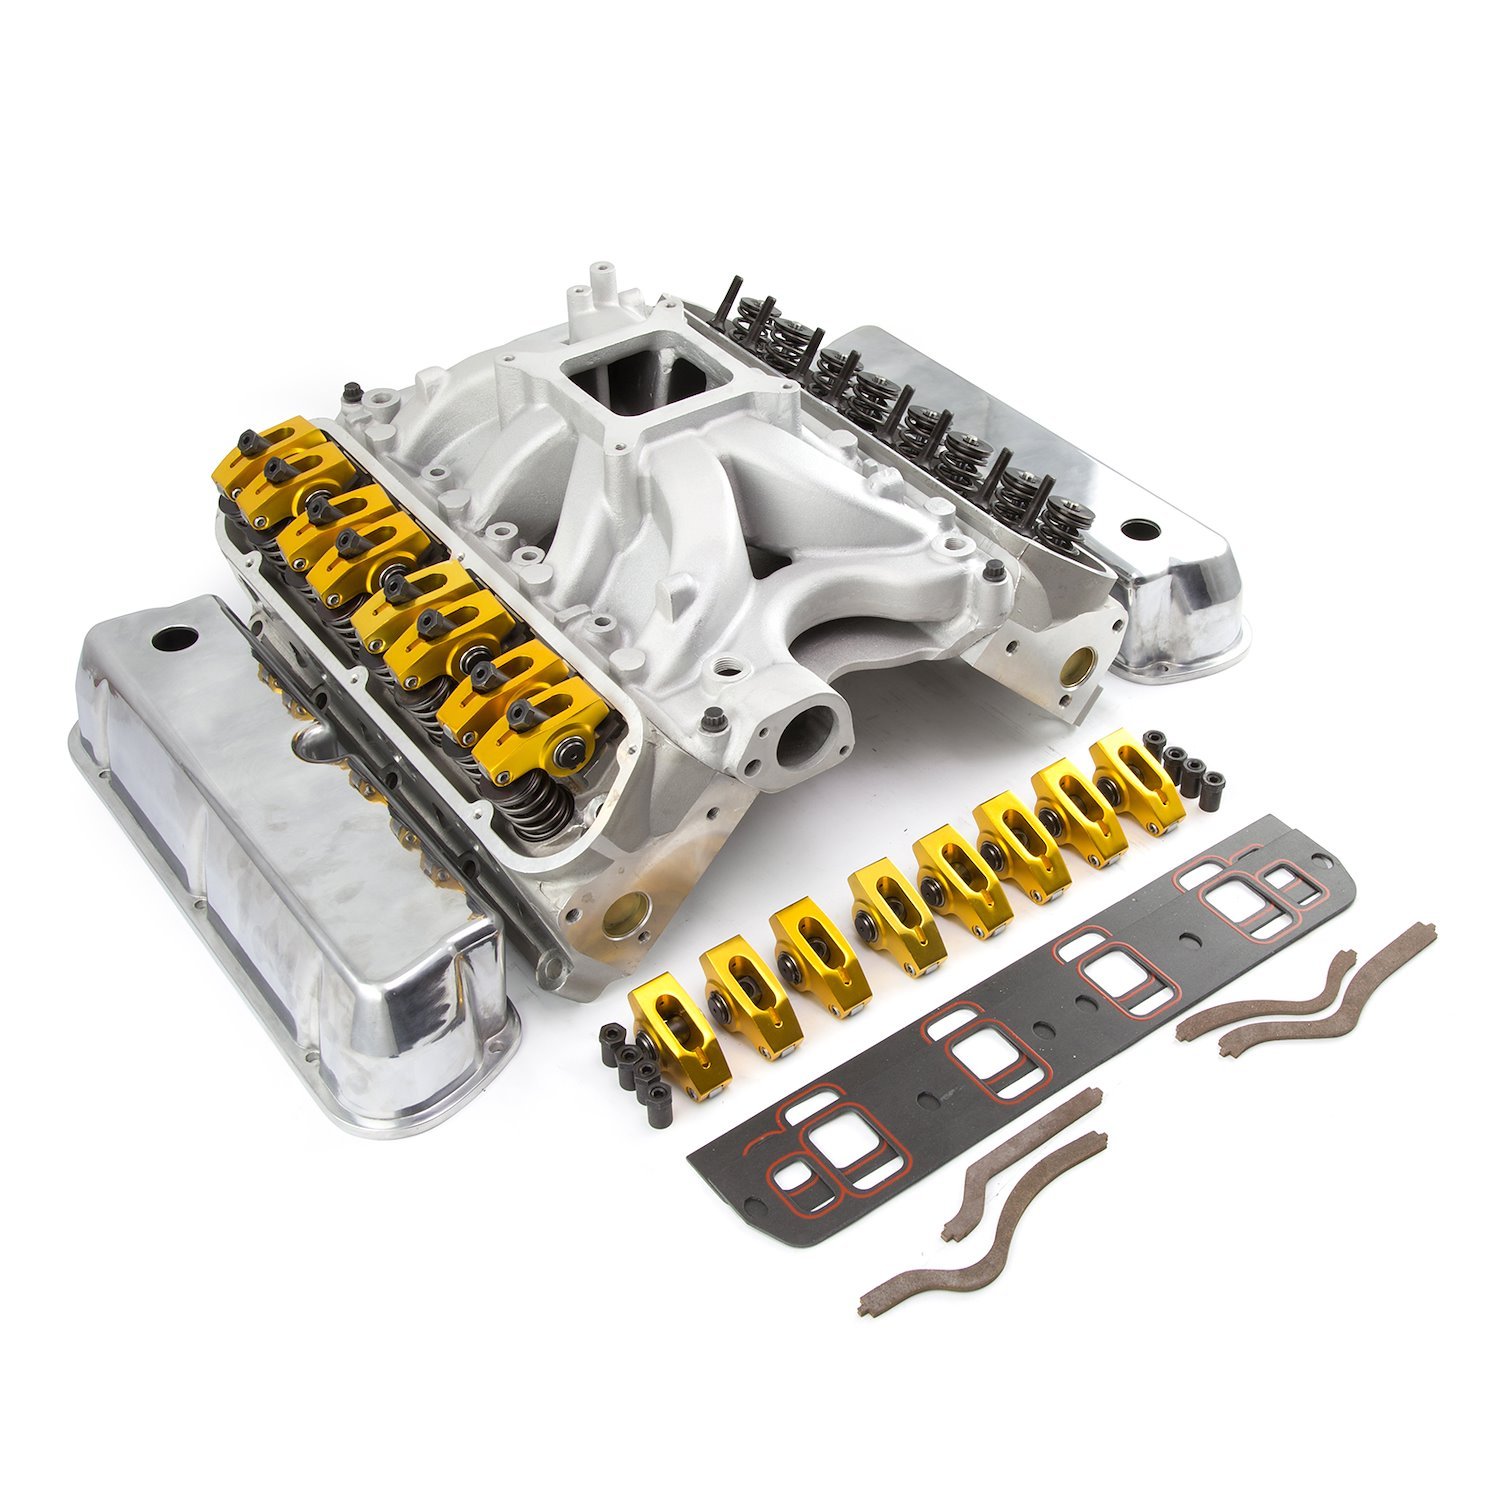 Ford SB 351 Windsor Hydraulic Roller CNC Top End Engine Kit